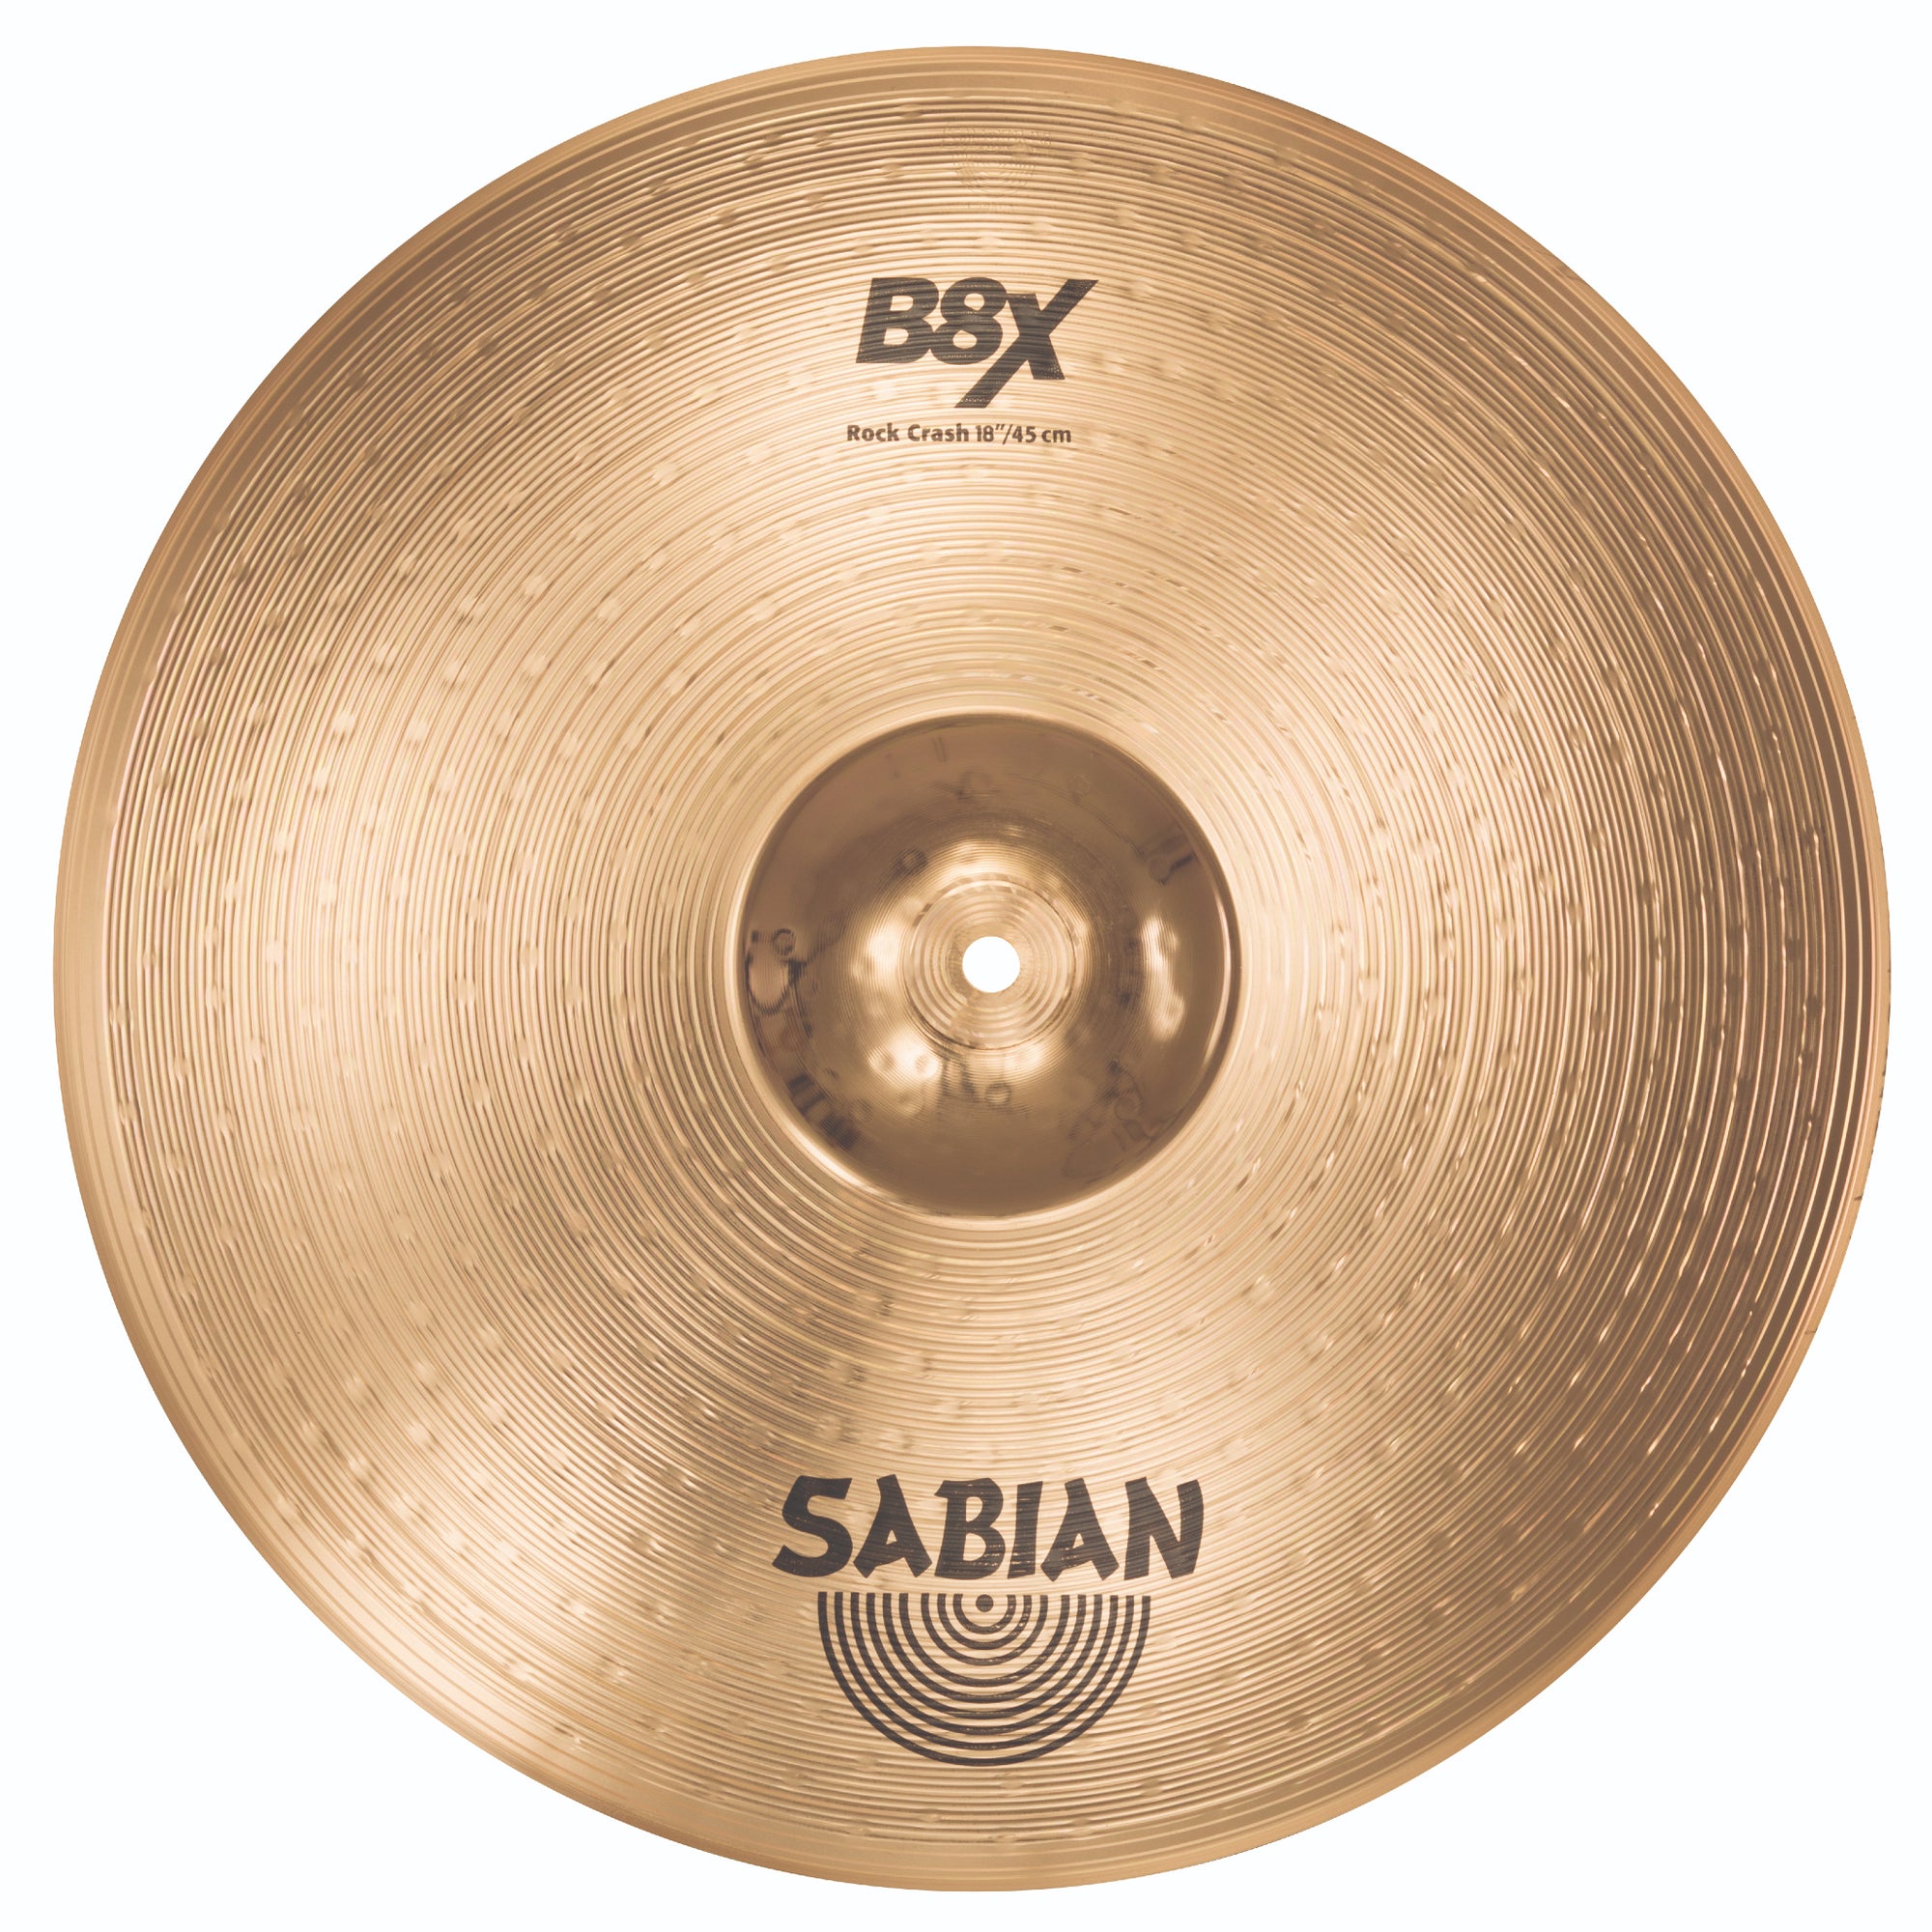 Sabian 41809X 18" B8X Rock Crash Cymbal